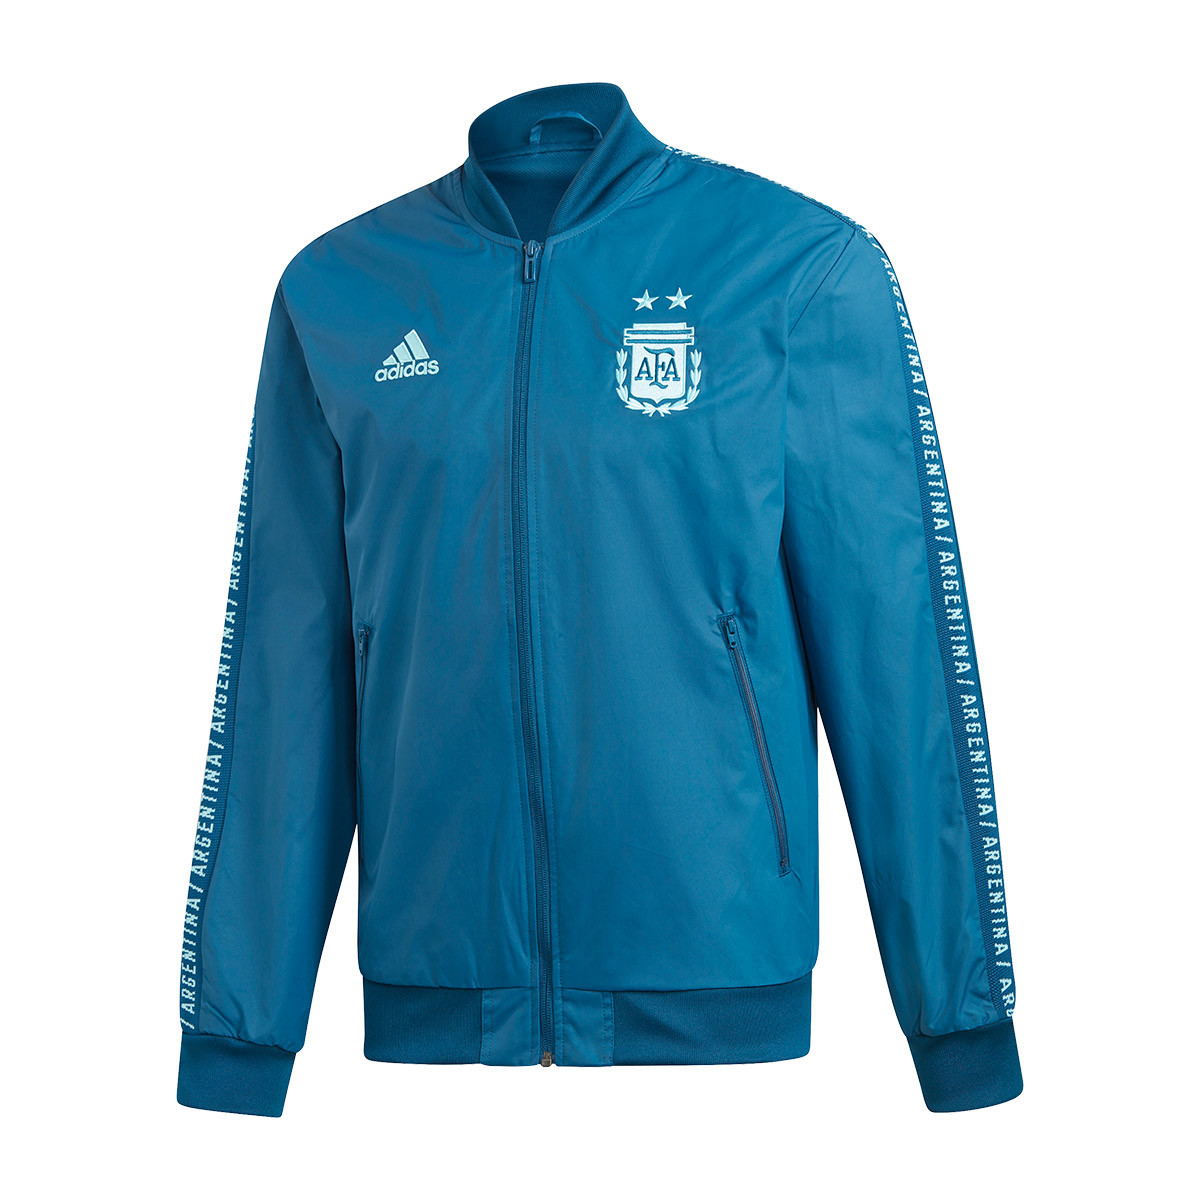 adidas 2019 jacket